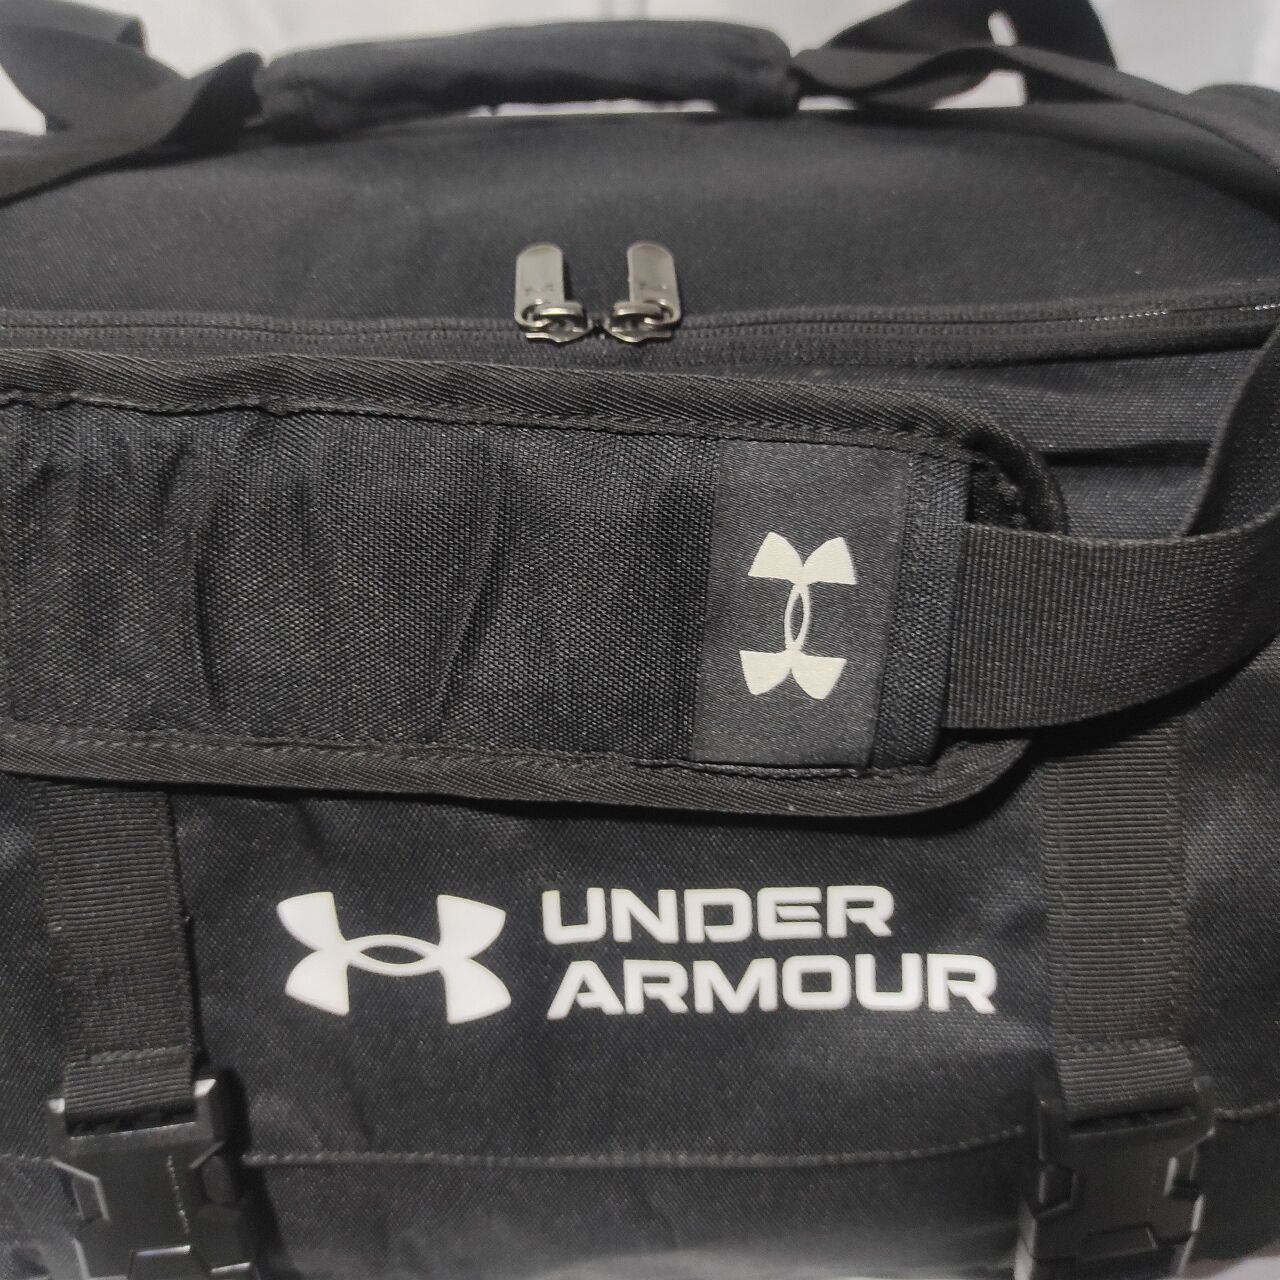 Under Armour Black Gametime Duffle Bag